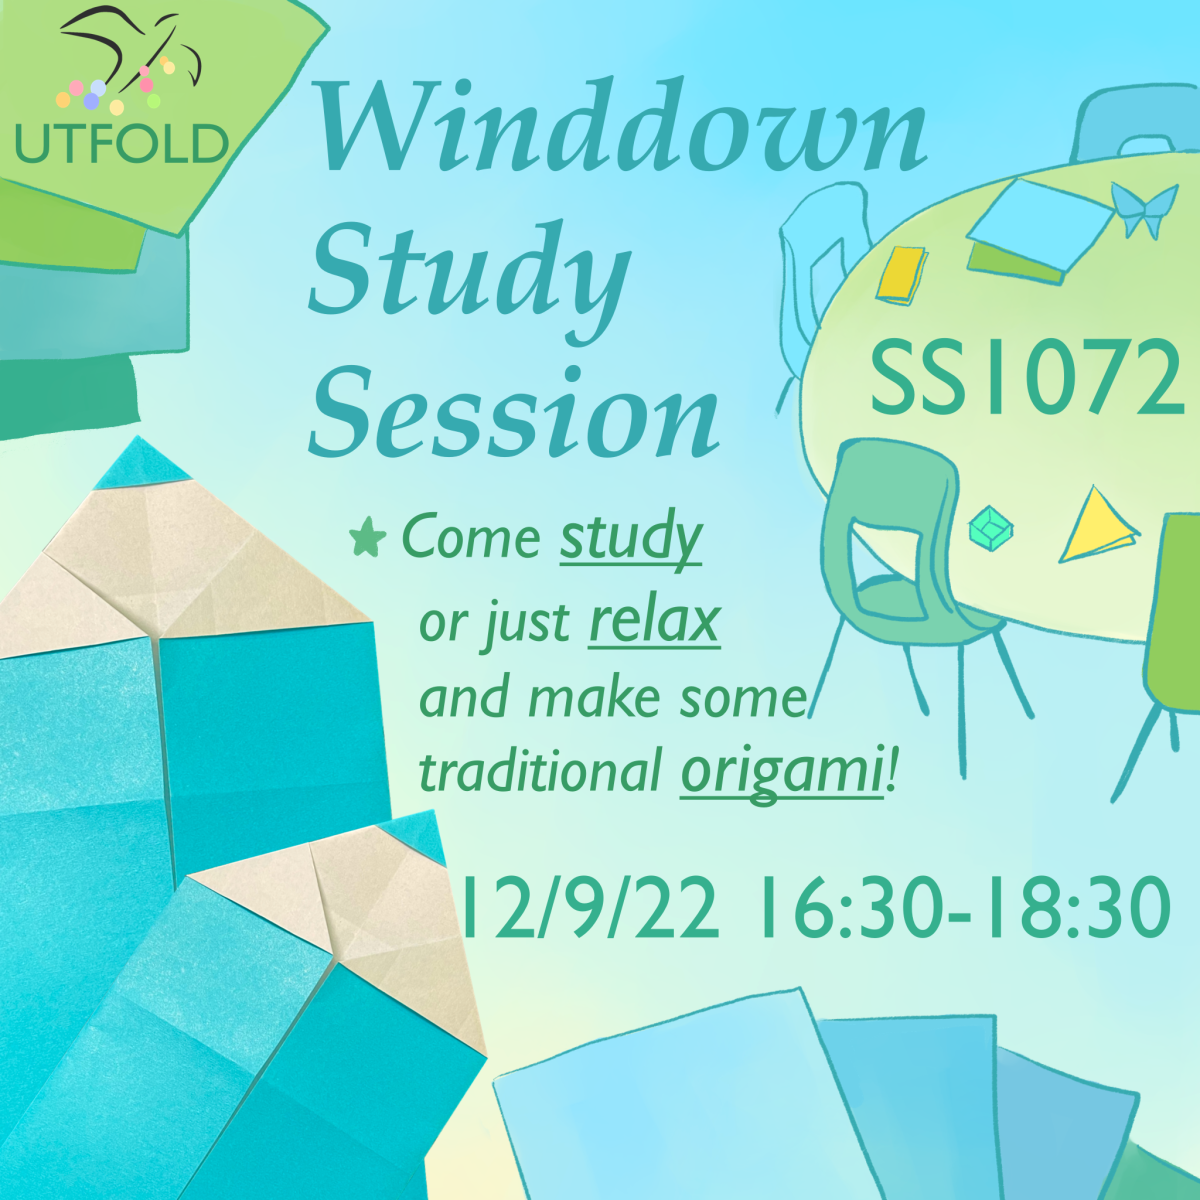 Winddown Study Session Returns! Last workshop of 2022!